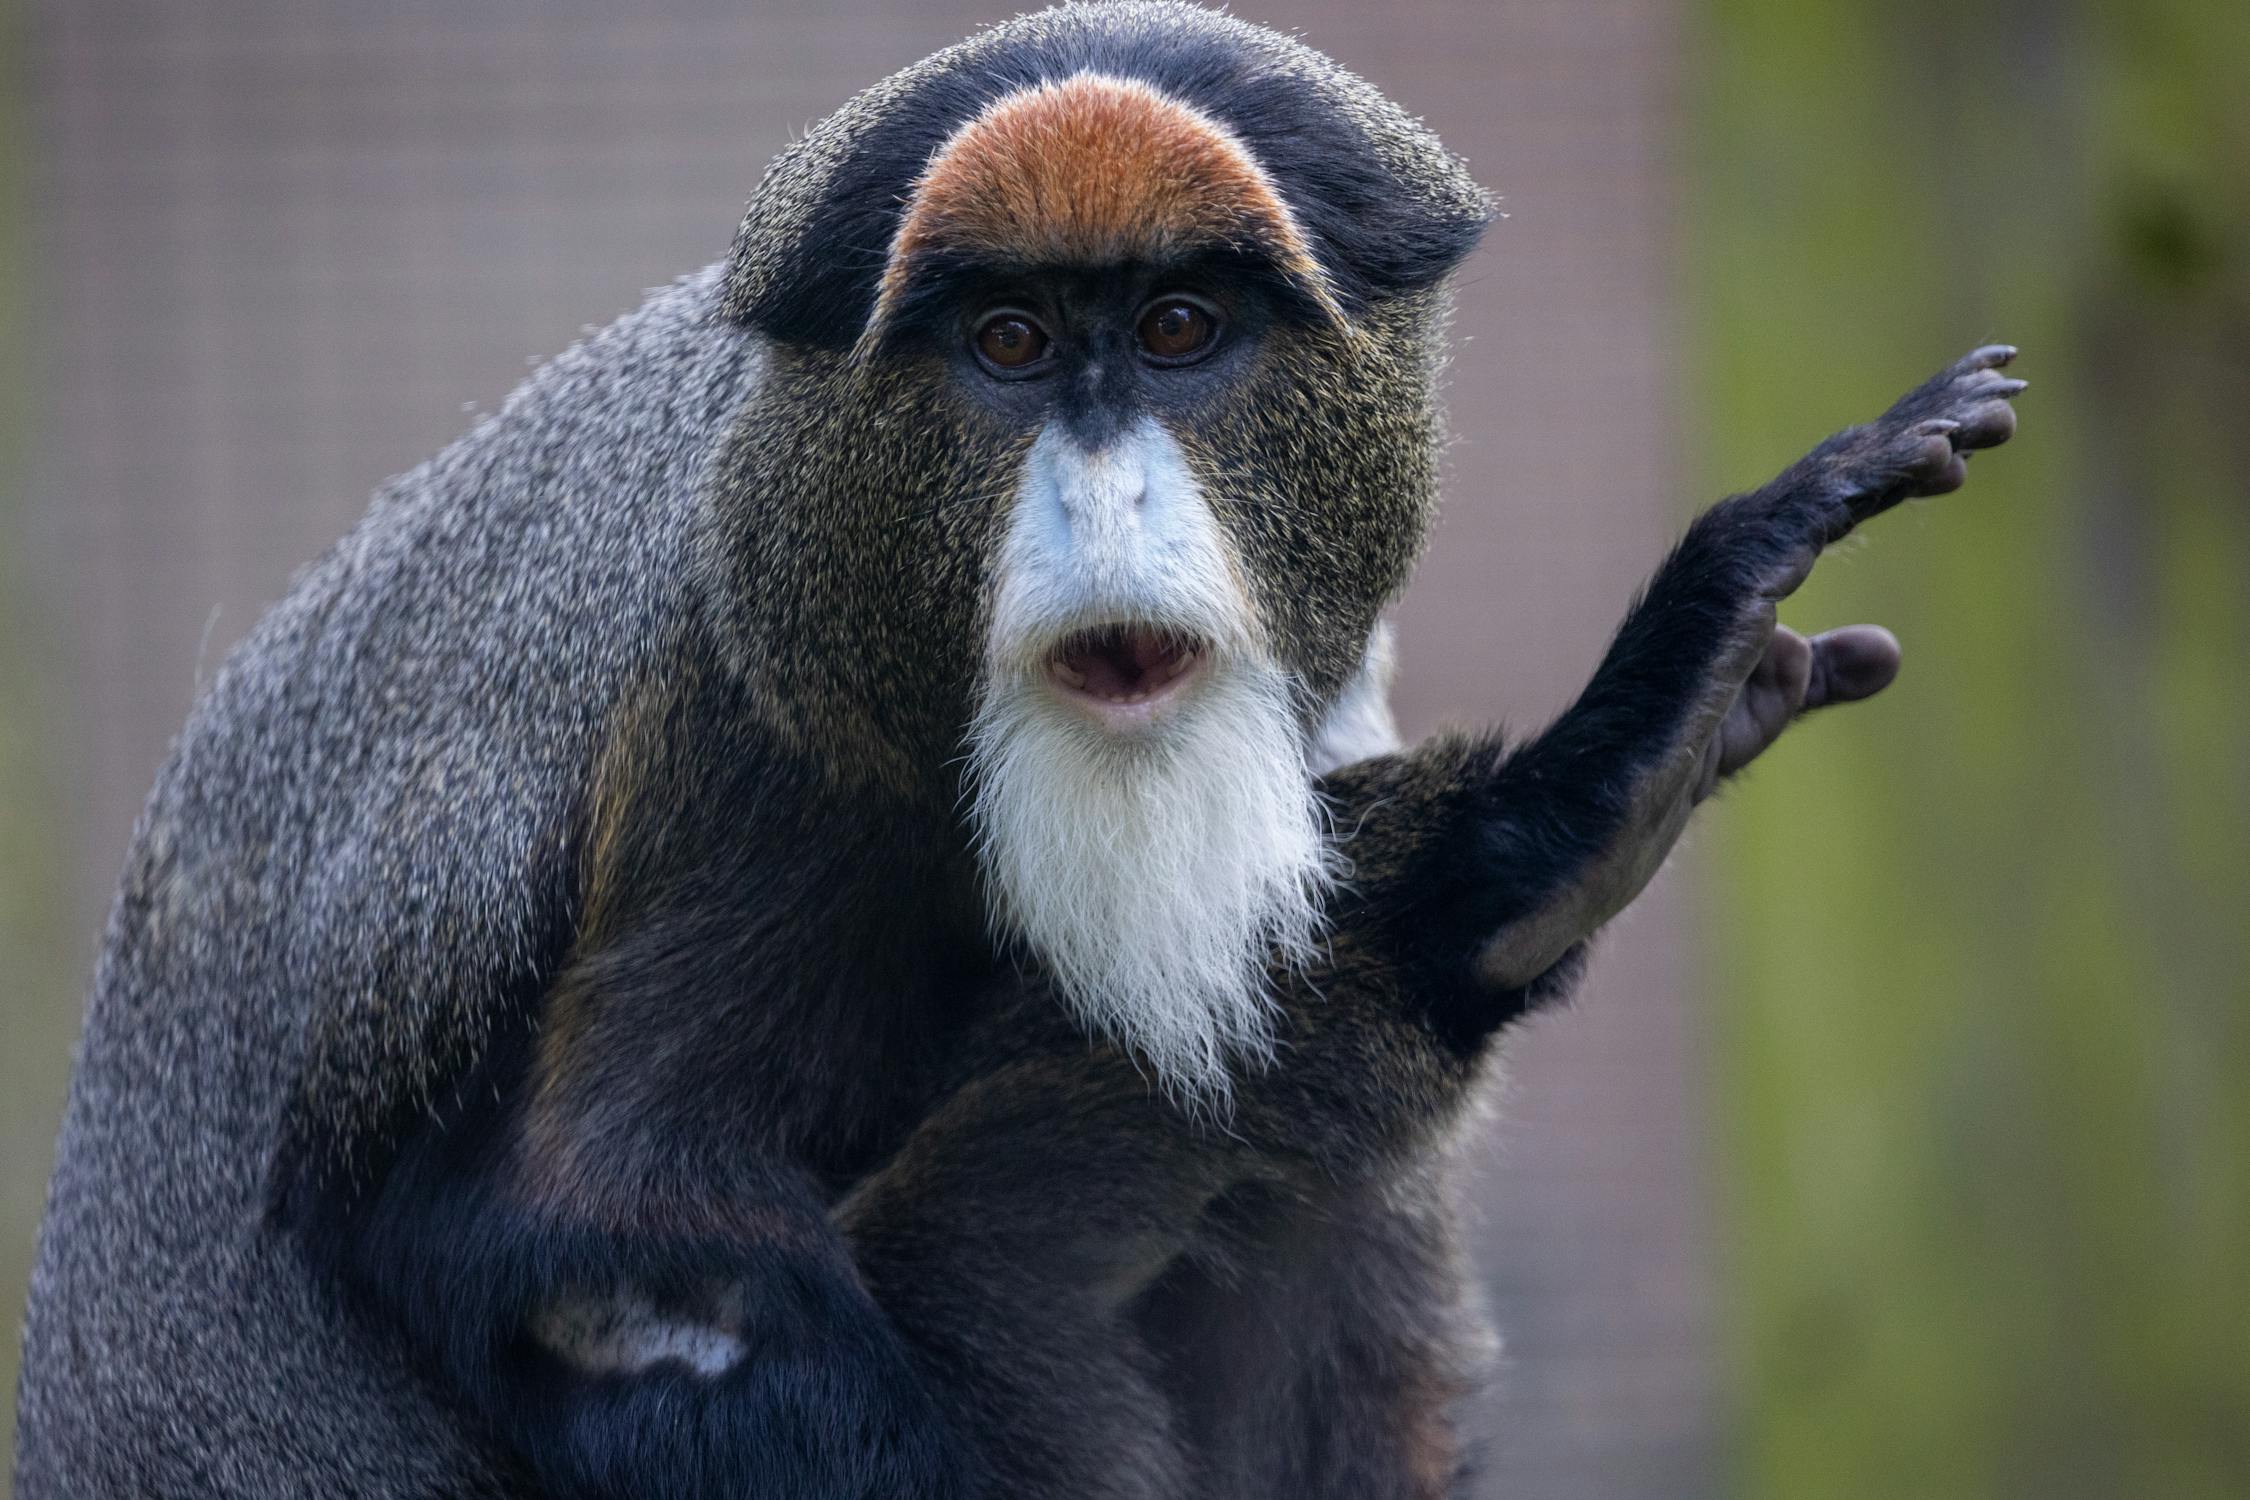 Monkey Photo by Neal Smith from Pexels: https://www.pexels.com/photo/de-brazza-s-monkey-12471586/